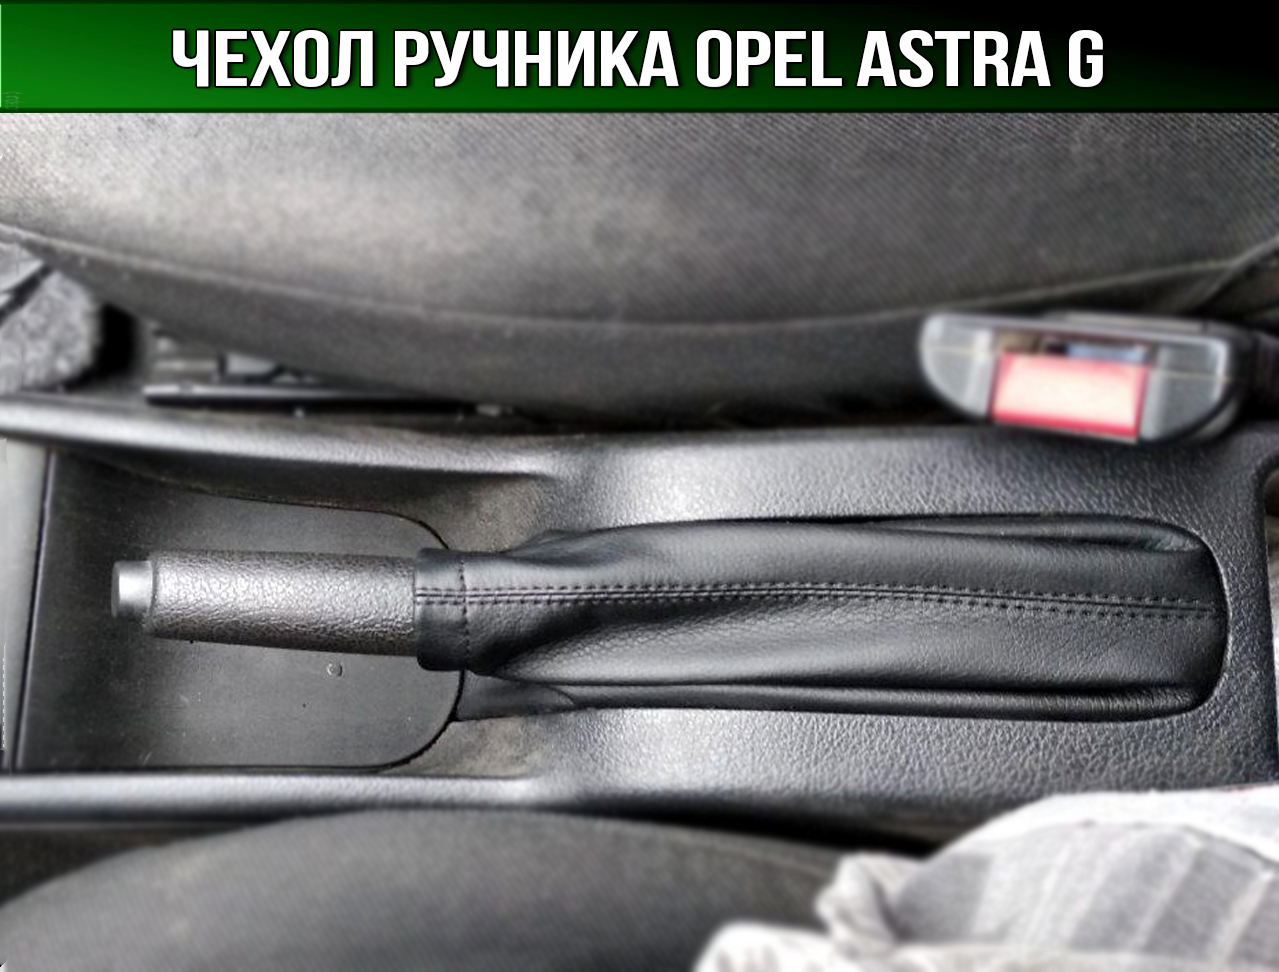 Накладки стояночного тормоза Opel Astra h. Чехол ручника Опель Омега б. Ручник опель зафира б